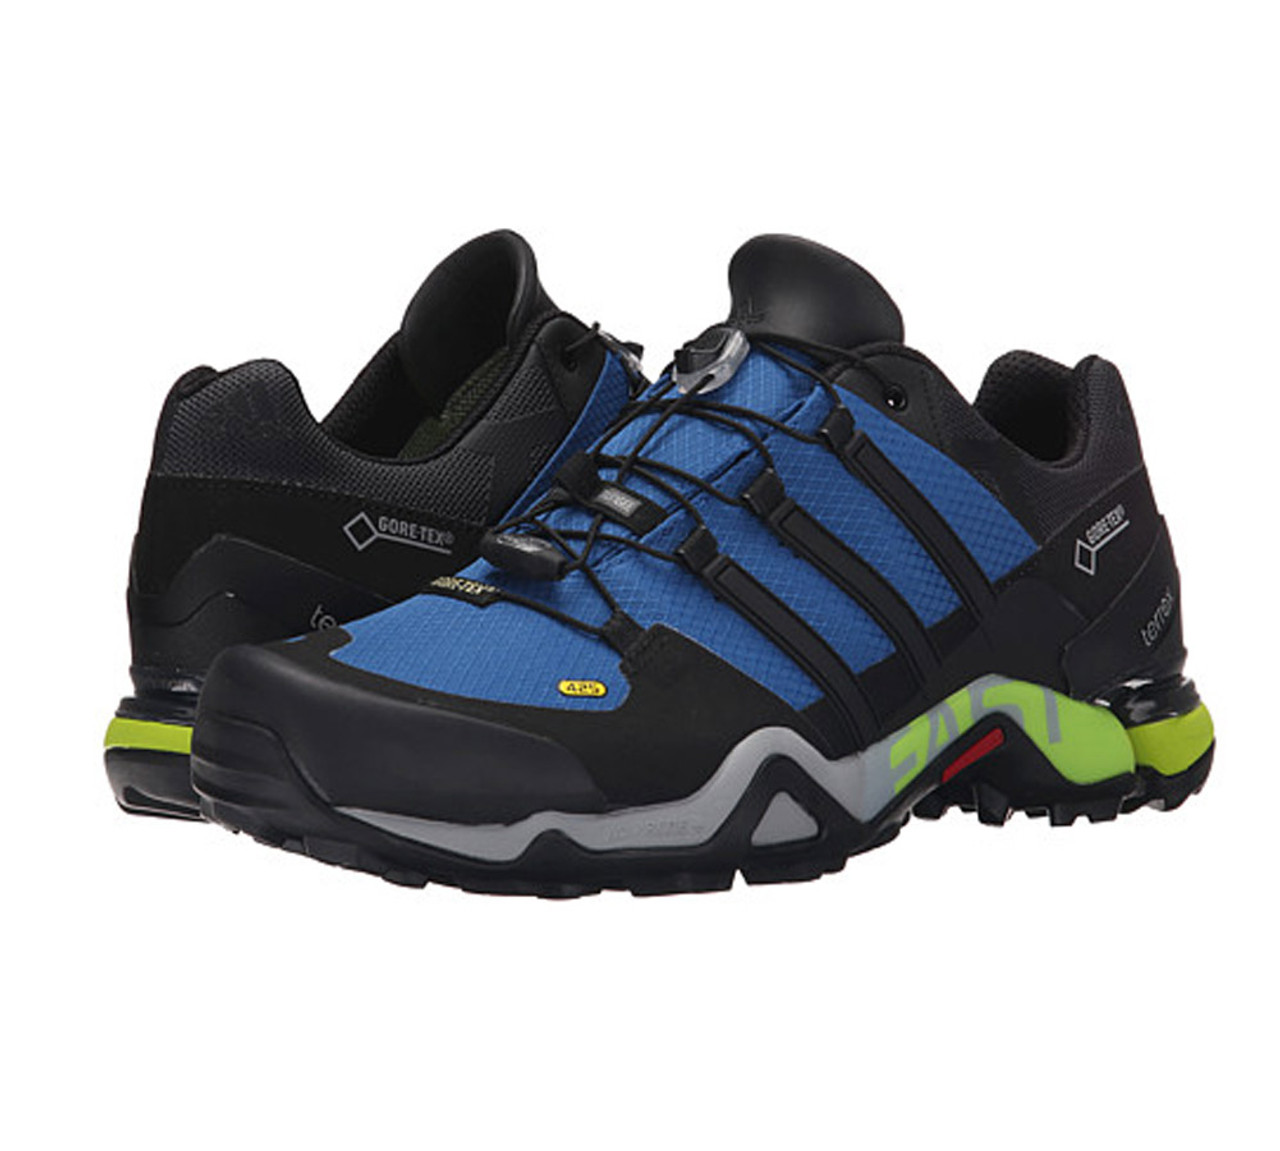 Adidas Men's Fast R GTX Hiking Shoe Discount Adidas Men's Athletic Shoes & More - Shoolu.com | Shoolu.com